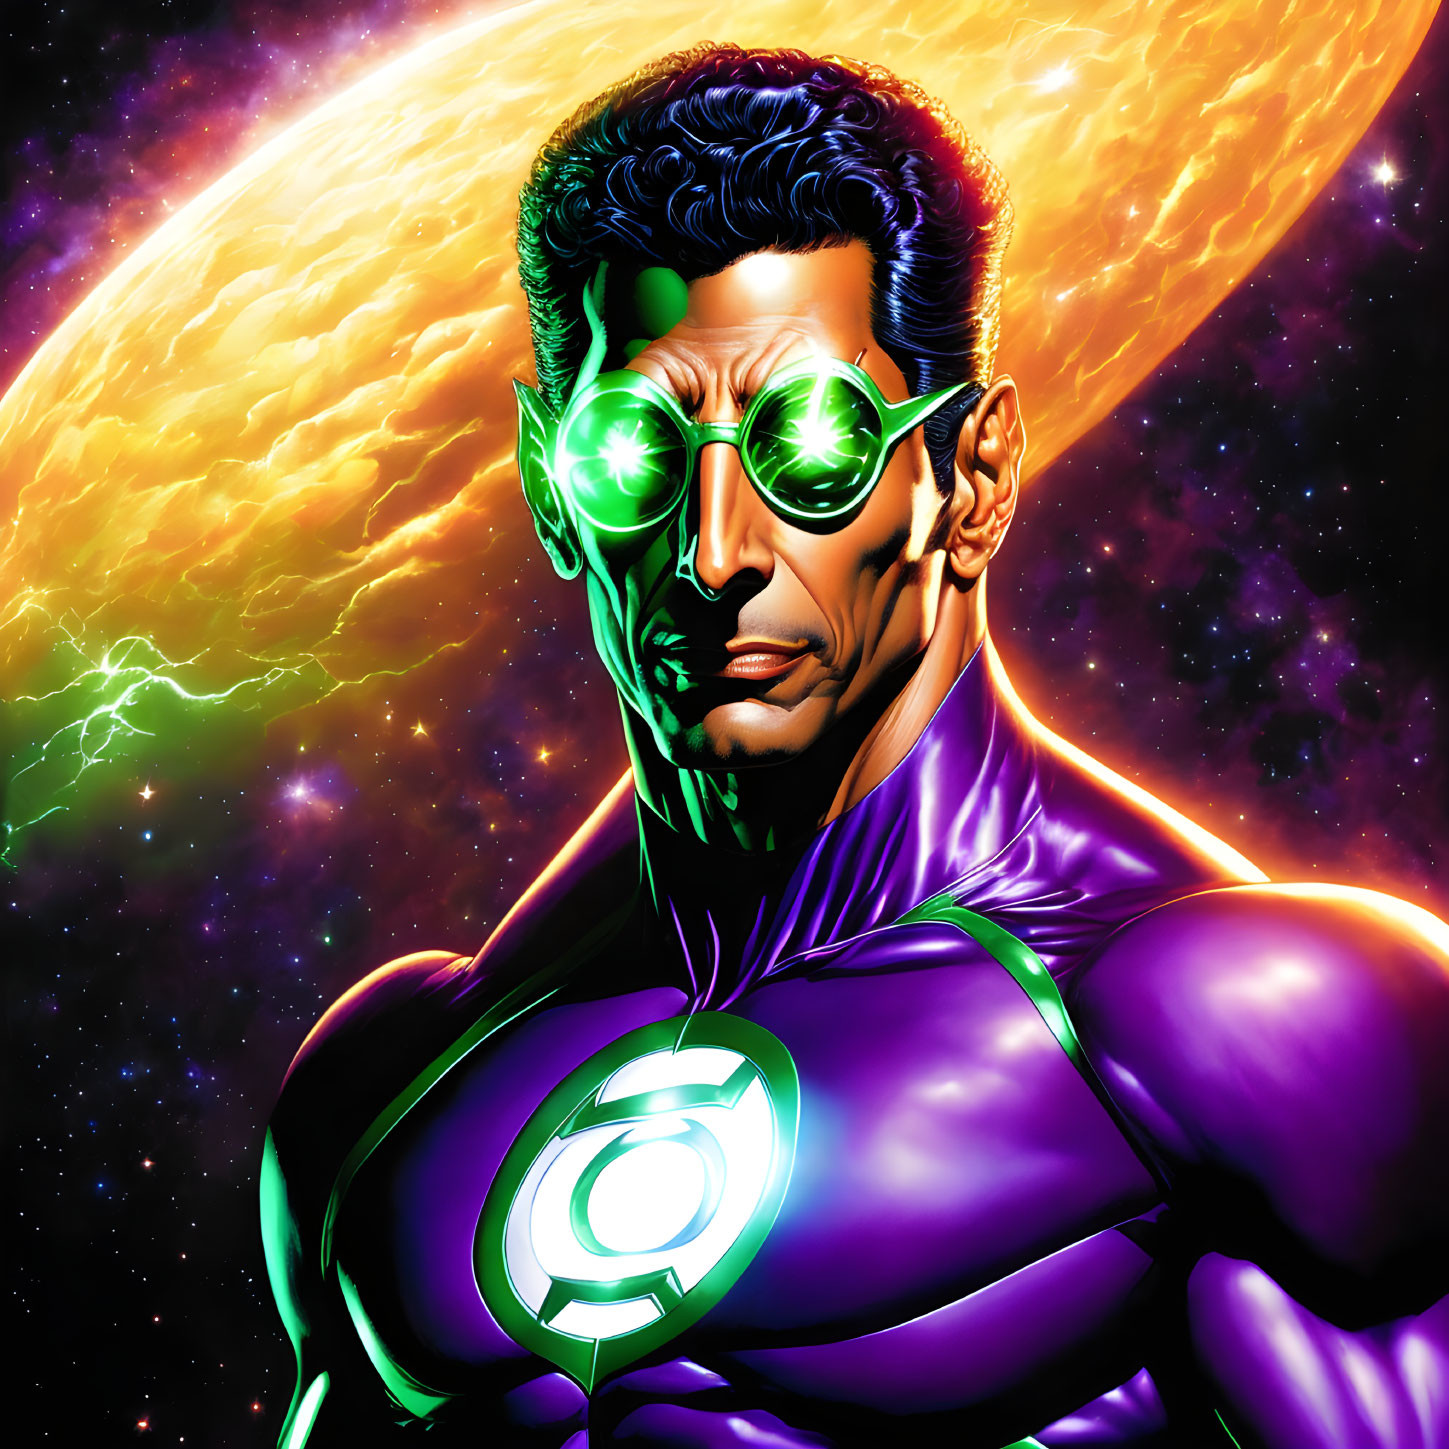 Superhero with Green Glowing Eyes in Purple Suit on Cosmic Background